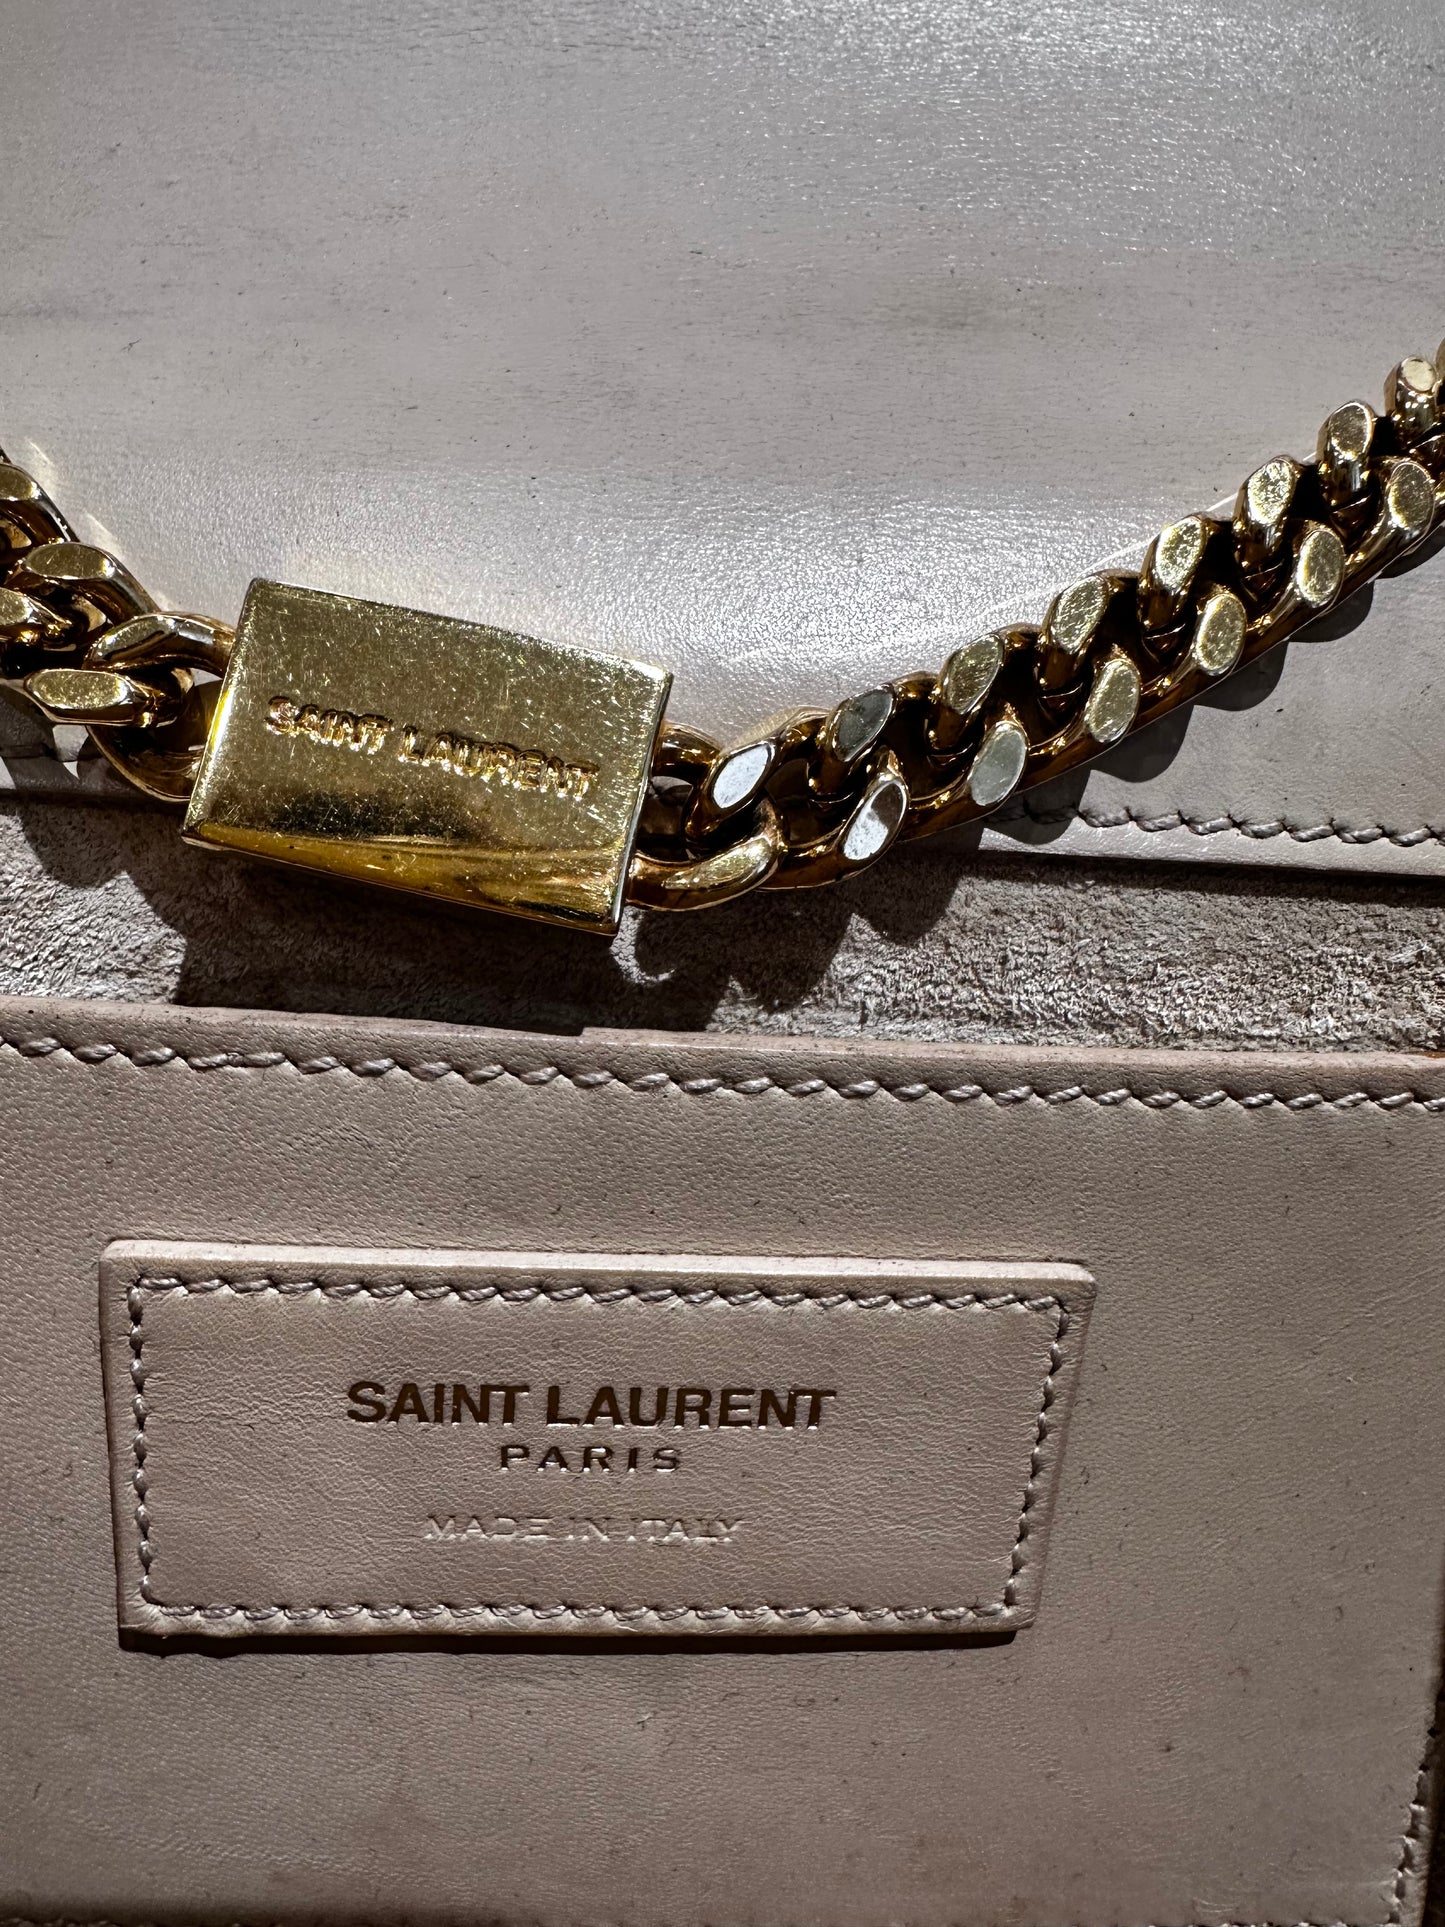 Saint Laurent Kate borsa in pelle beige metallo oro